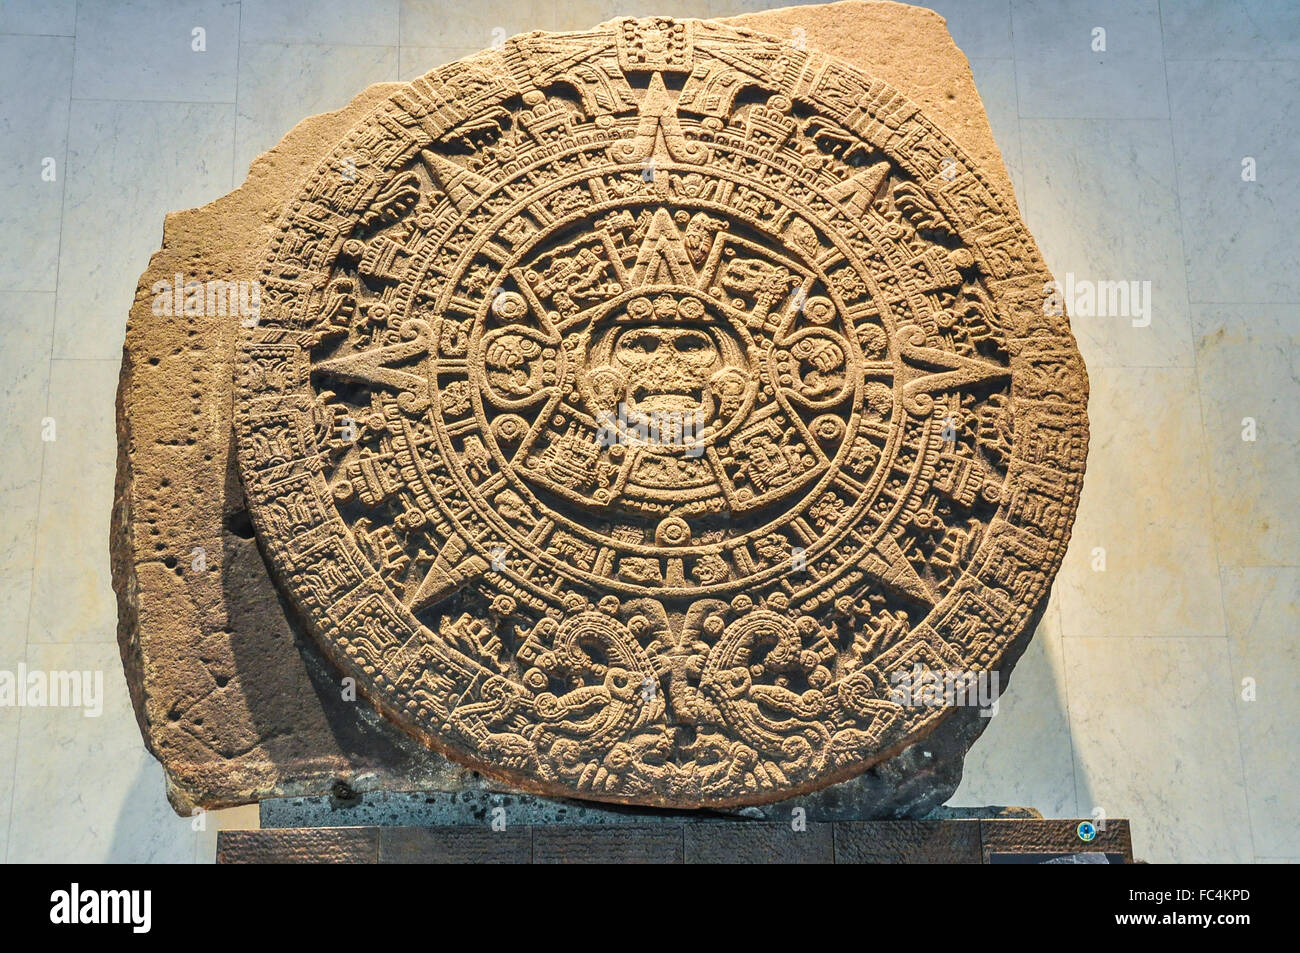 mythological art Mayan calendar aztec carved wall art old gods aztec sun stone Aztec calendar